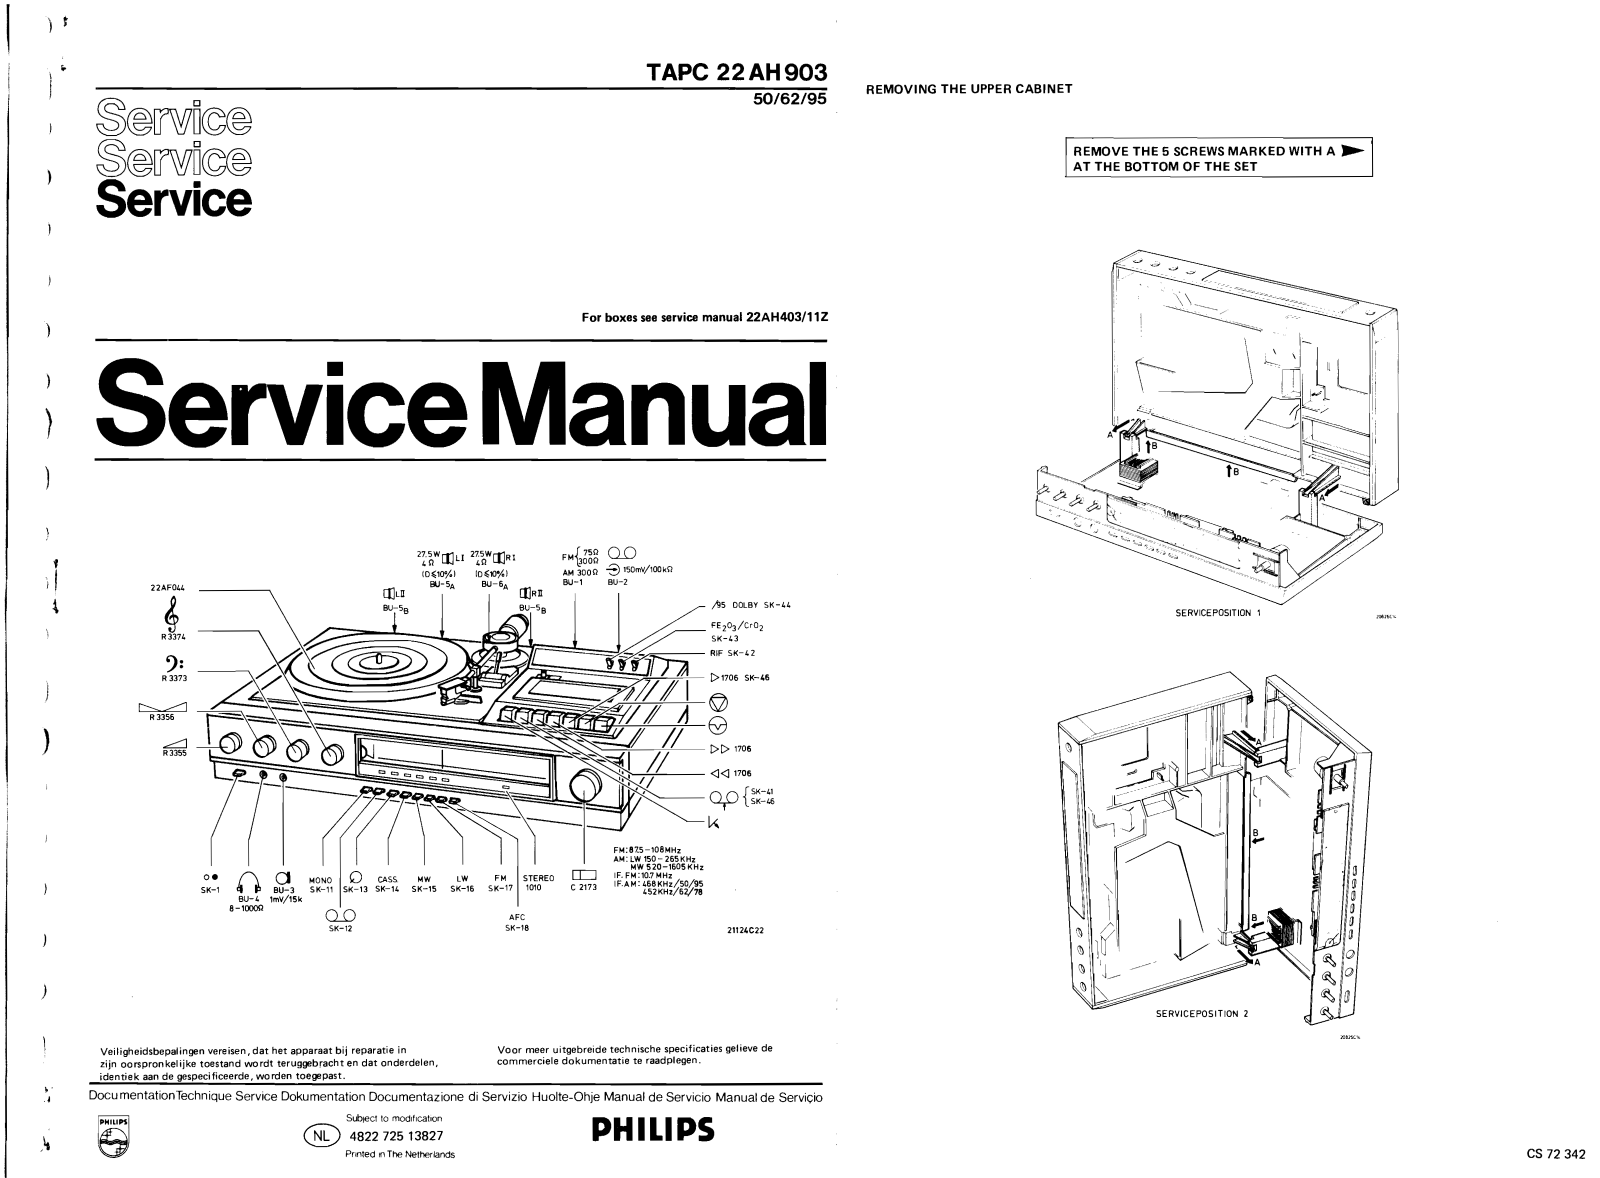 Philips 22-AH-903 Service Manual